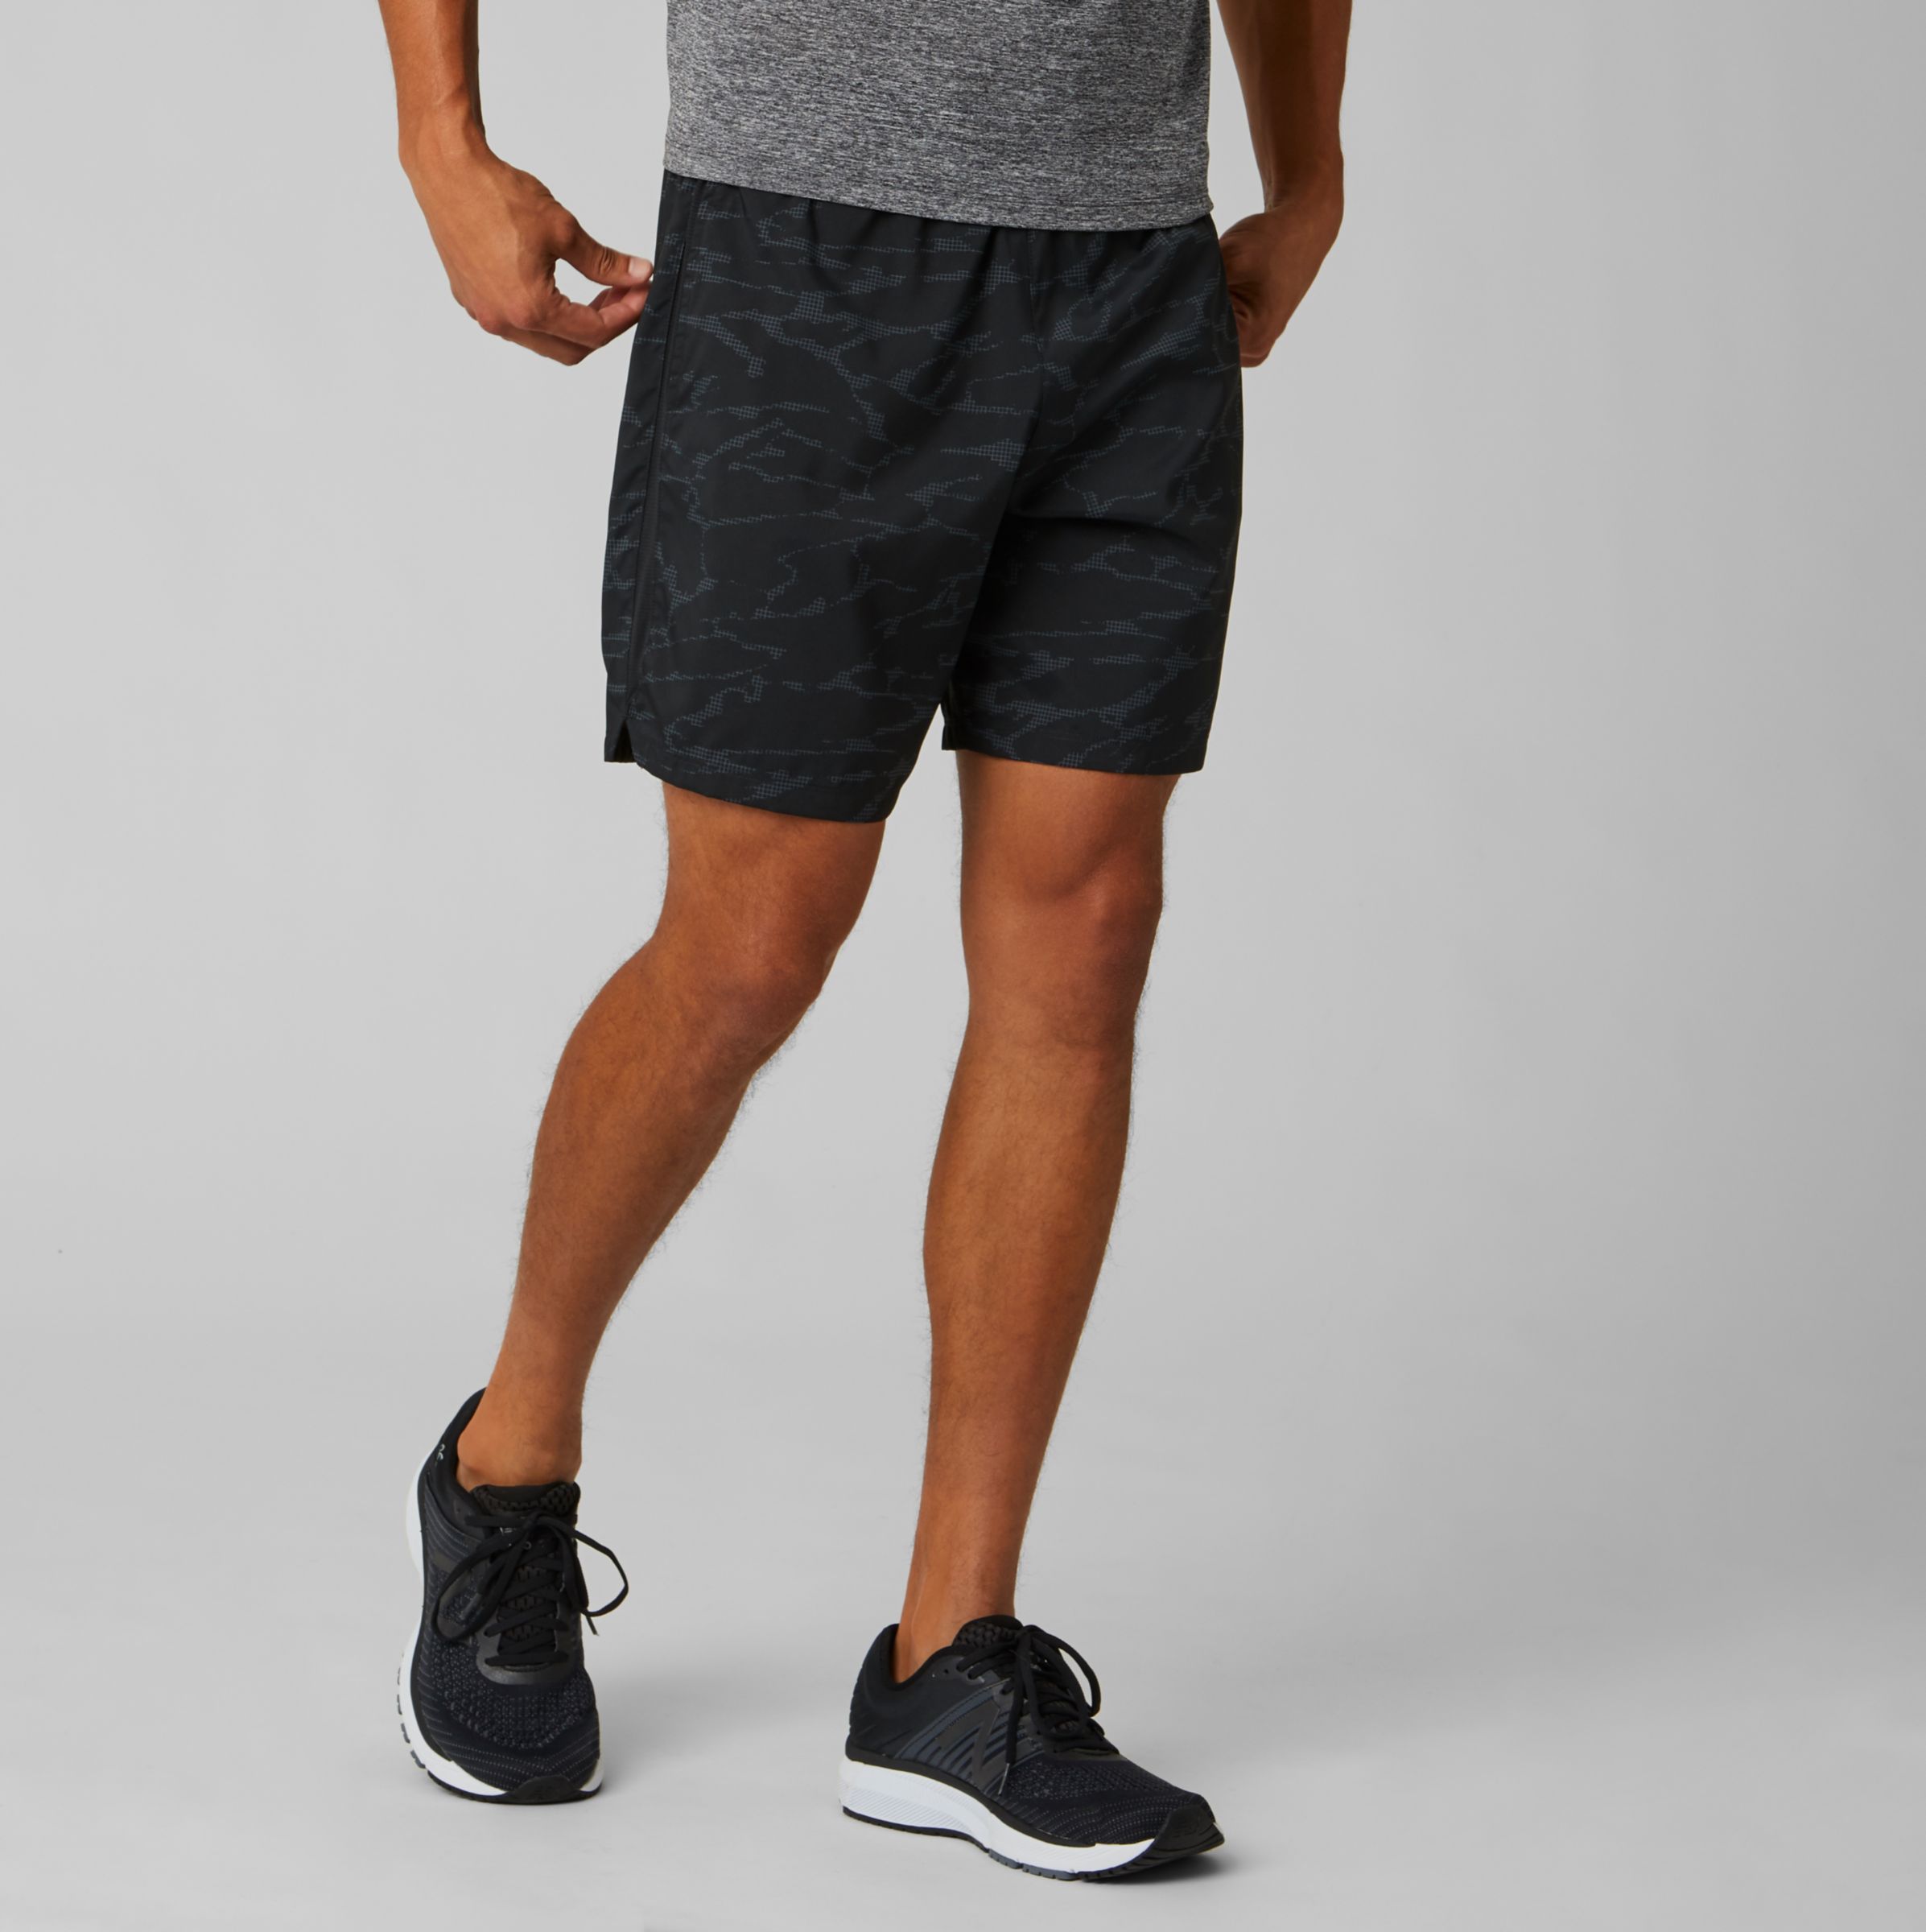 new balance accelerate 7 inch running shorts